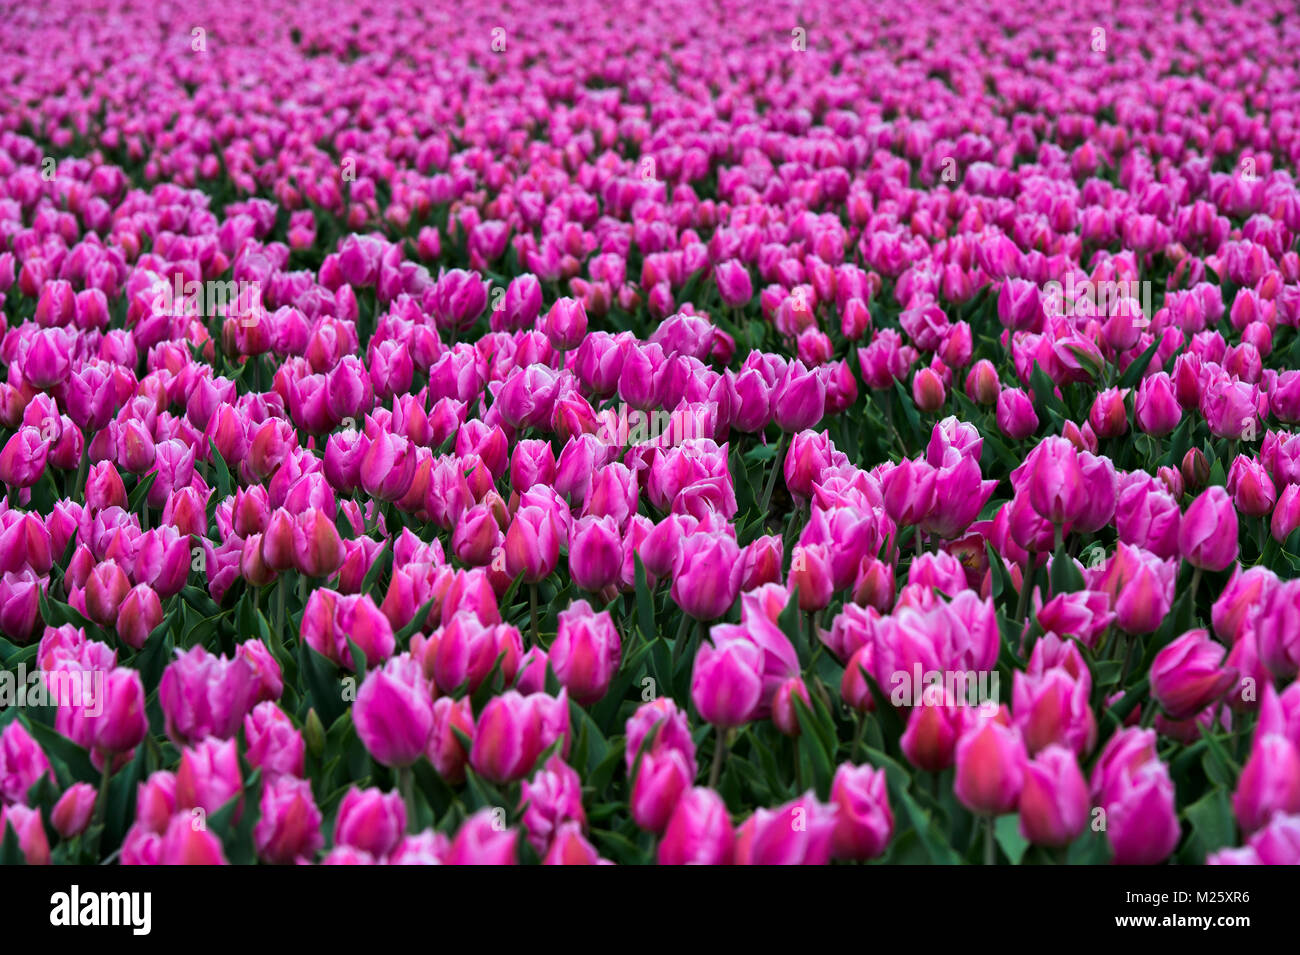 Blooming tulip field of pink tulips, Bollenstreek area, Netherlands Stock Photo